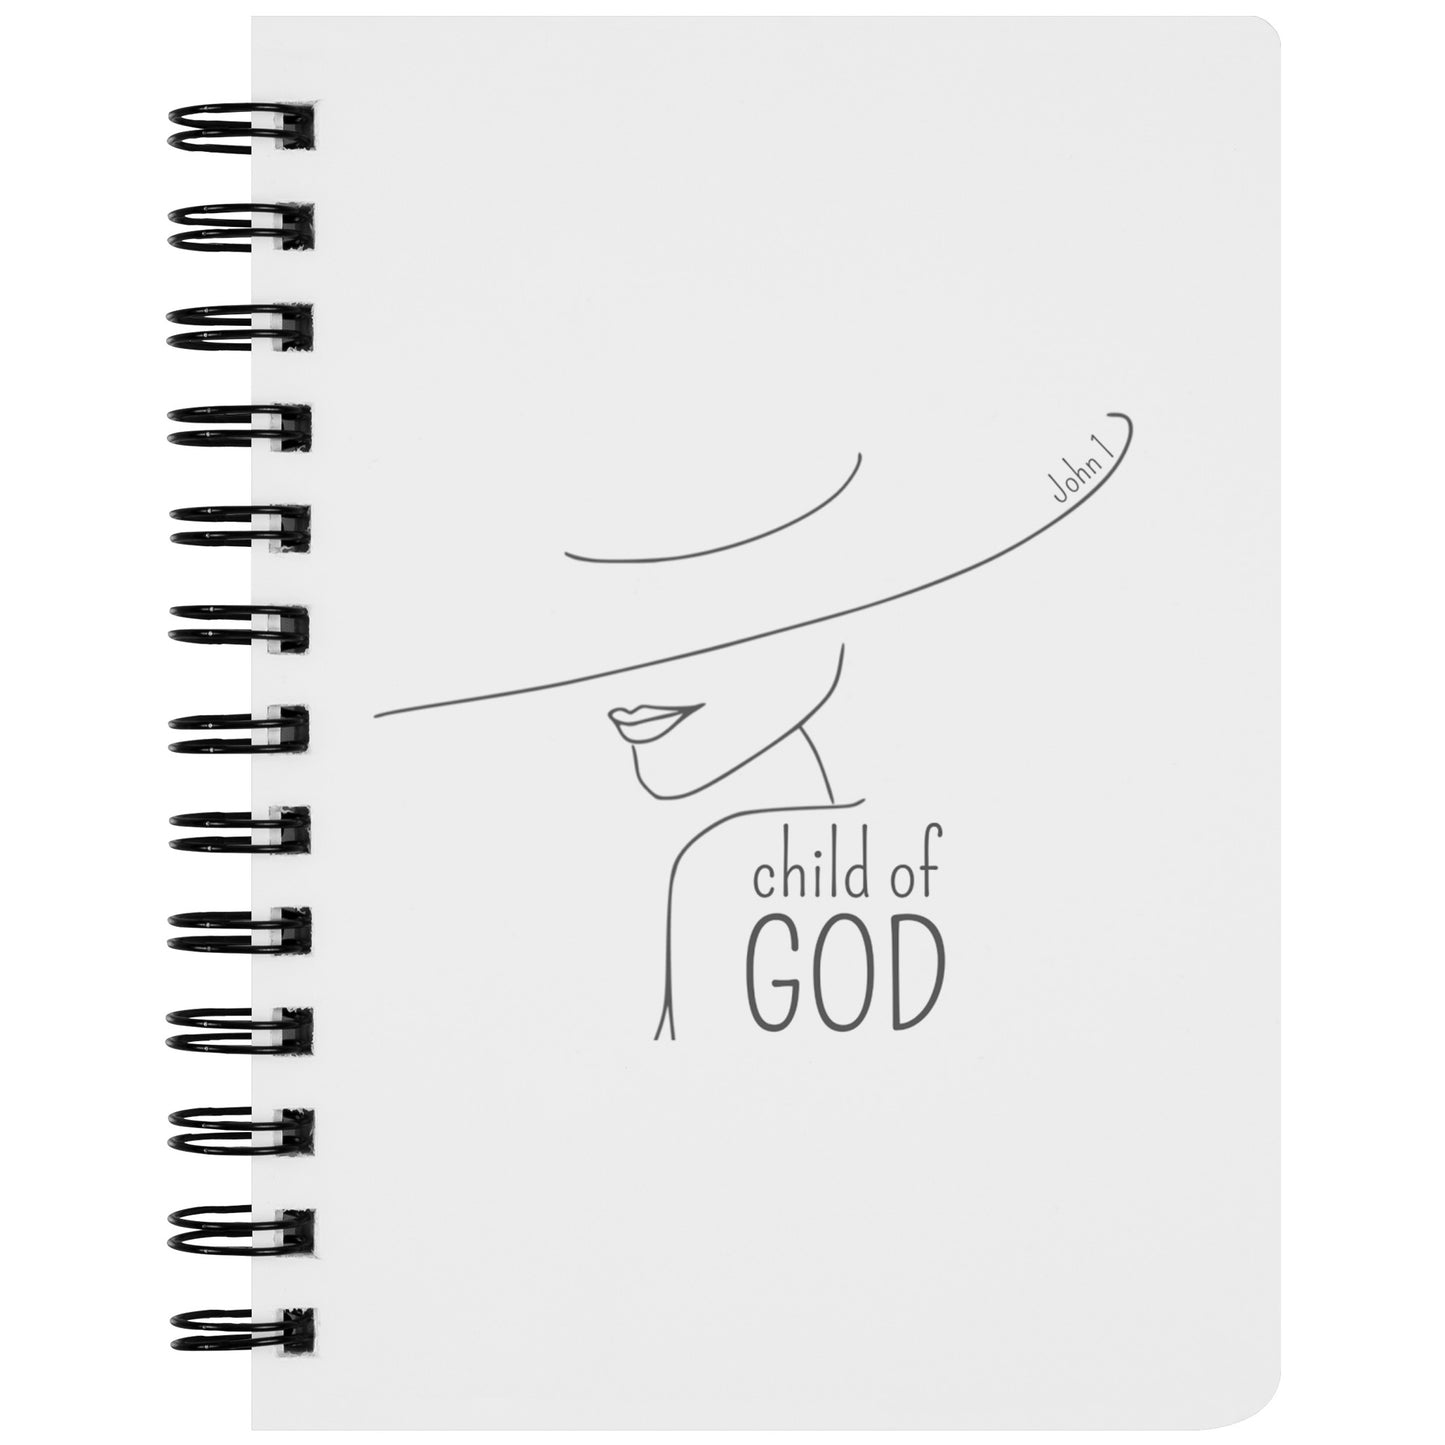 Child of God Spiral Journal Notebook